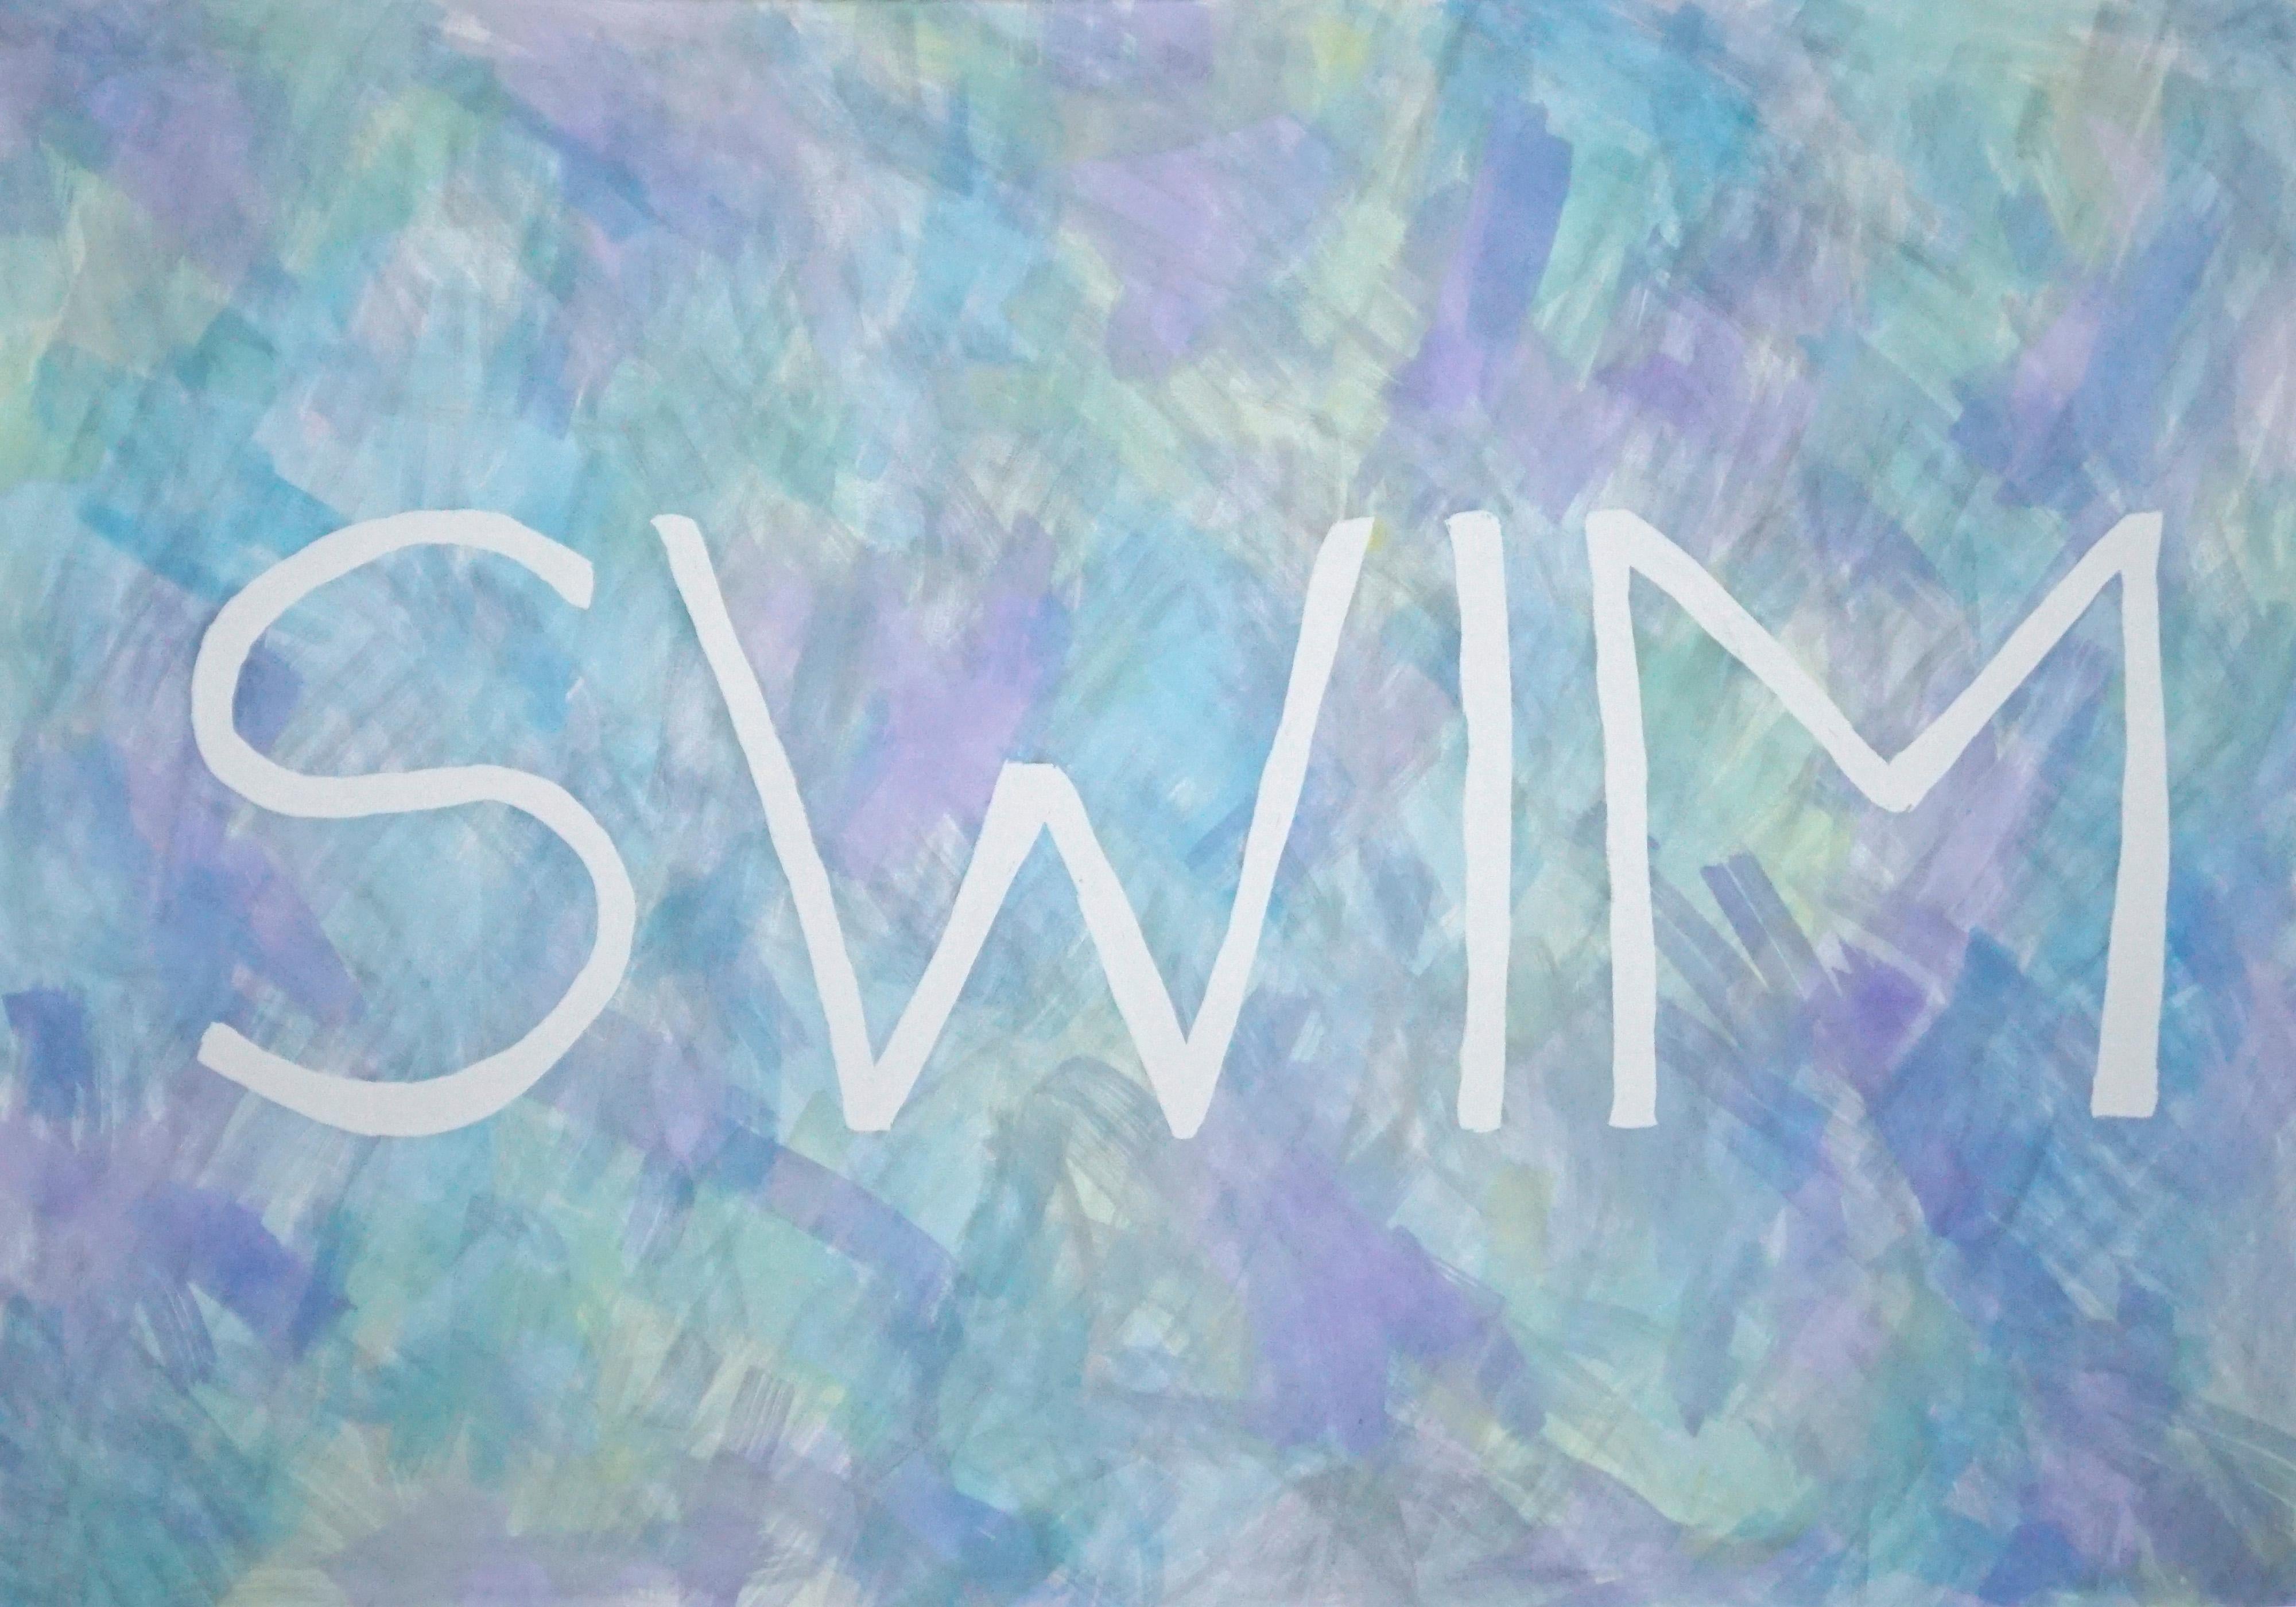 Swim, Summer Fresh Painting on Paper, Word Art Pastel Tones Typography in Purple